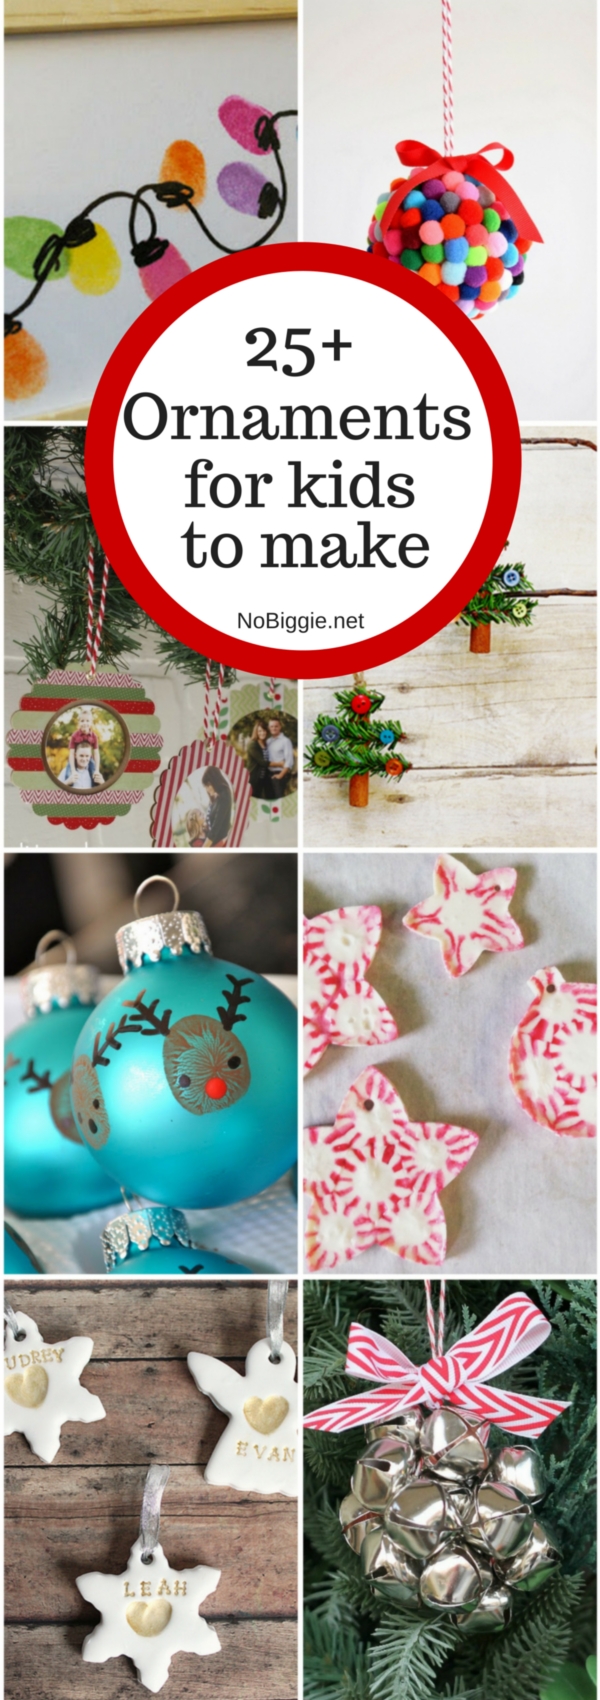 25+ ornaments for kids to make | NoBiggie.net